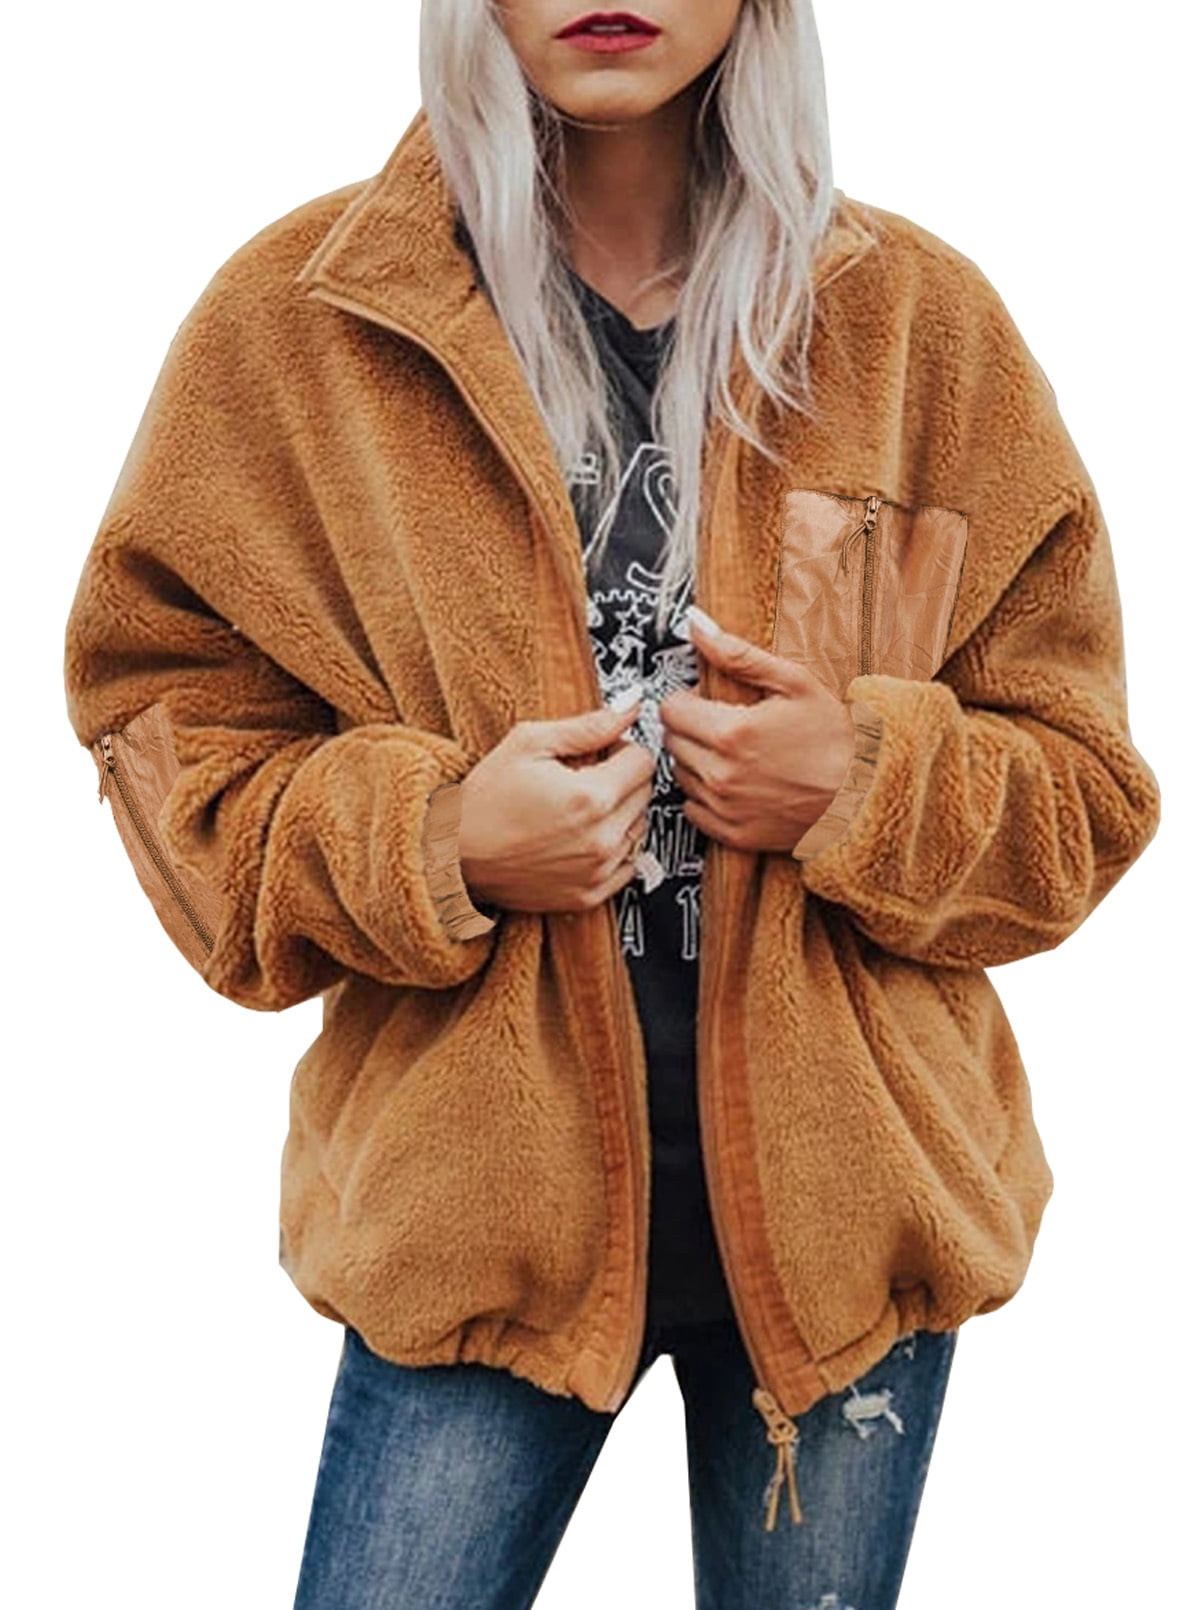 Solid Color Shaggy Faux Fur Cropped Coat Jacket for Women Winter Warm Lapel Fox Fleece Overcoat Outwear with Pockets 